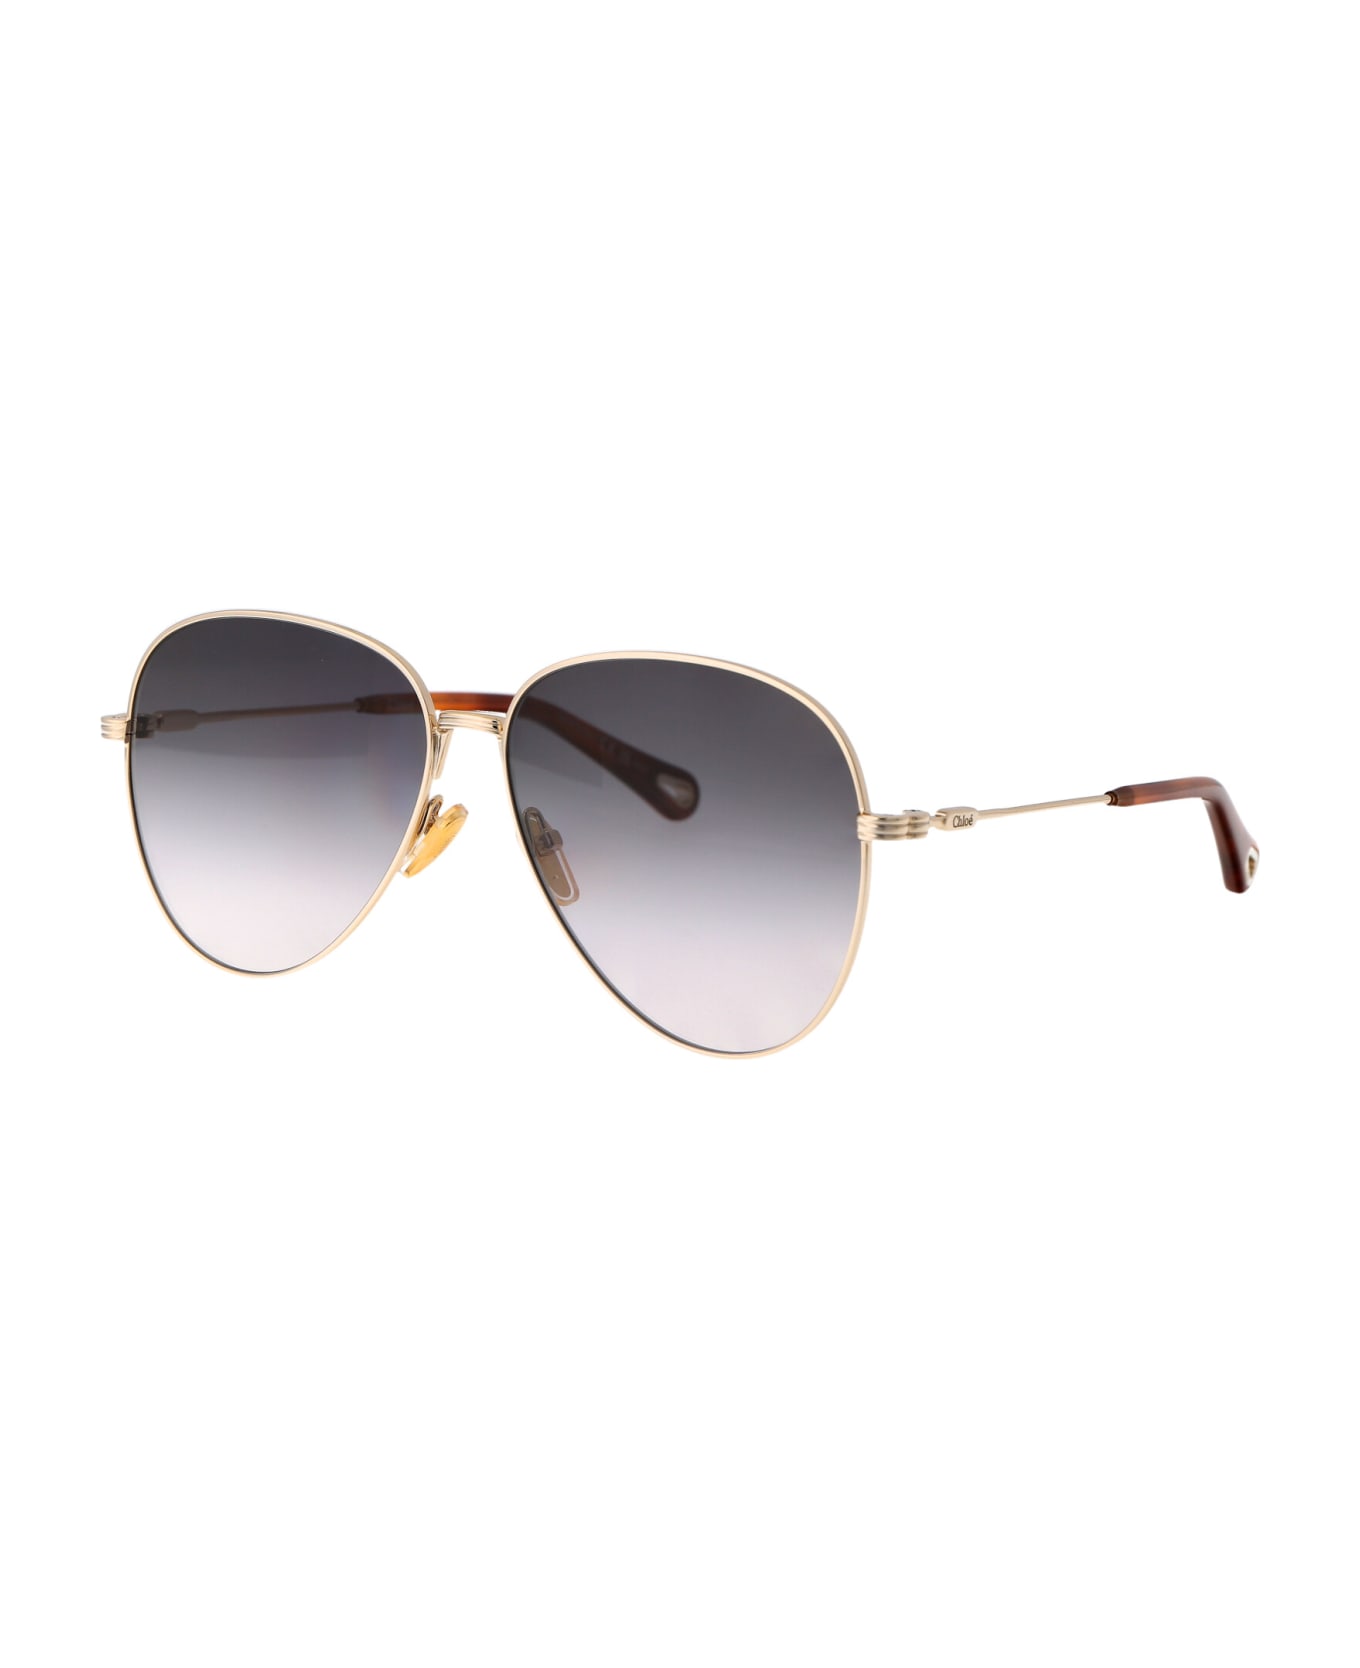 Chloé Eyewear Ch0177s Sunglasses - 001 GOLD GOLD GREY